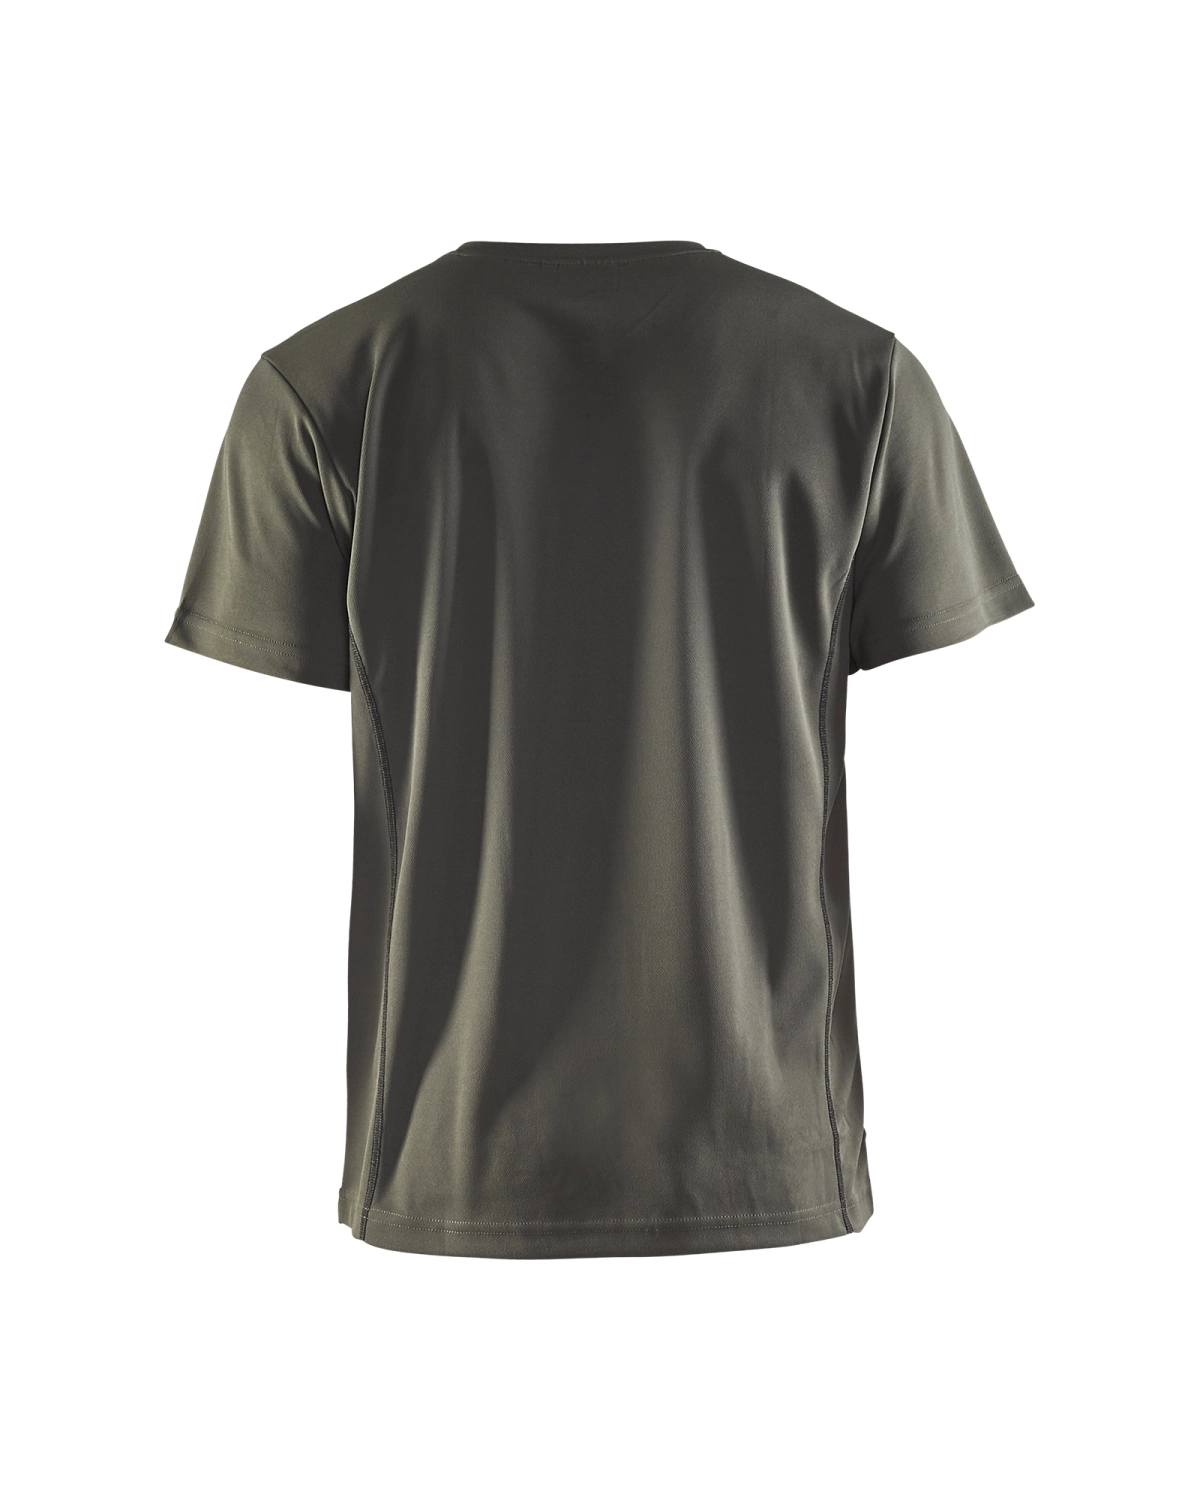 Blåkläder 3323 UV t-shirt - army groen - L